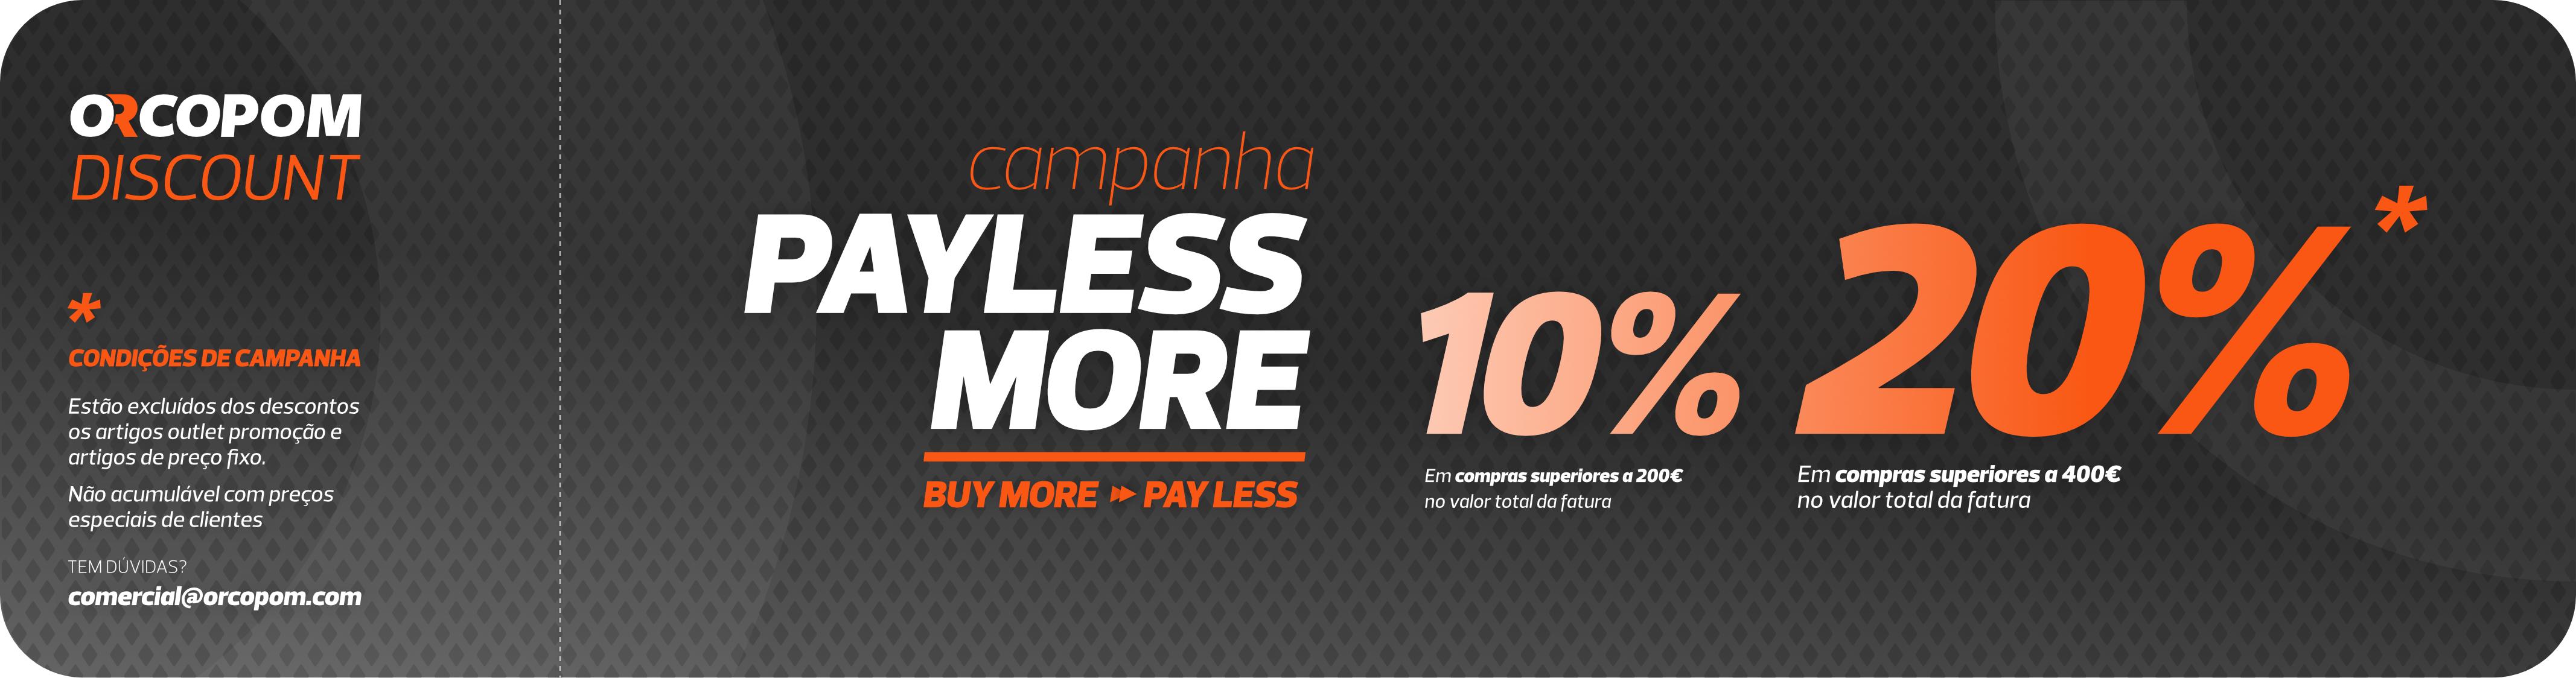 Payless More - Campanha